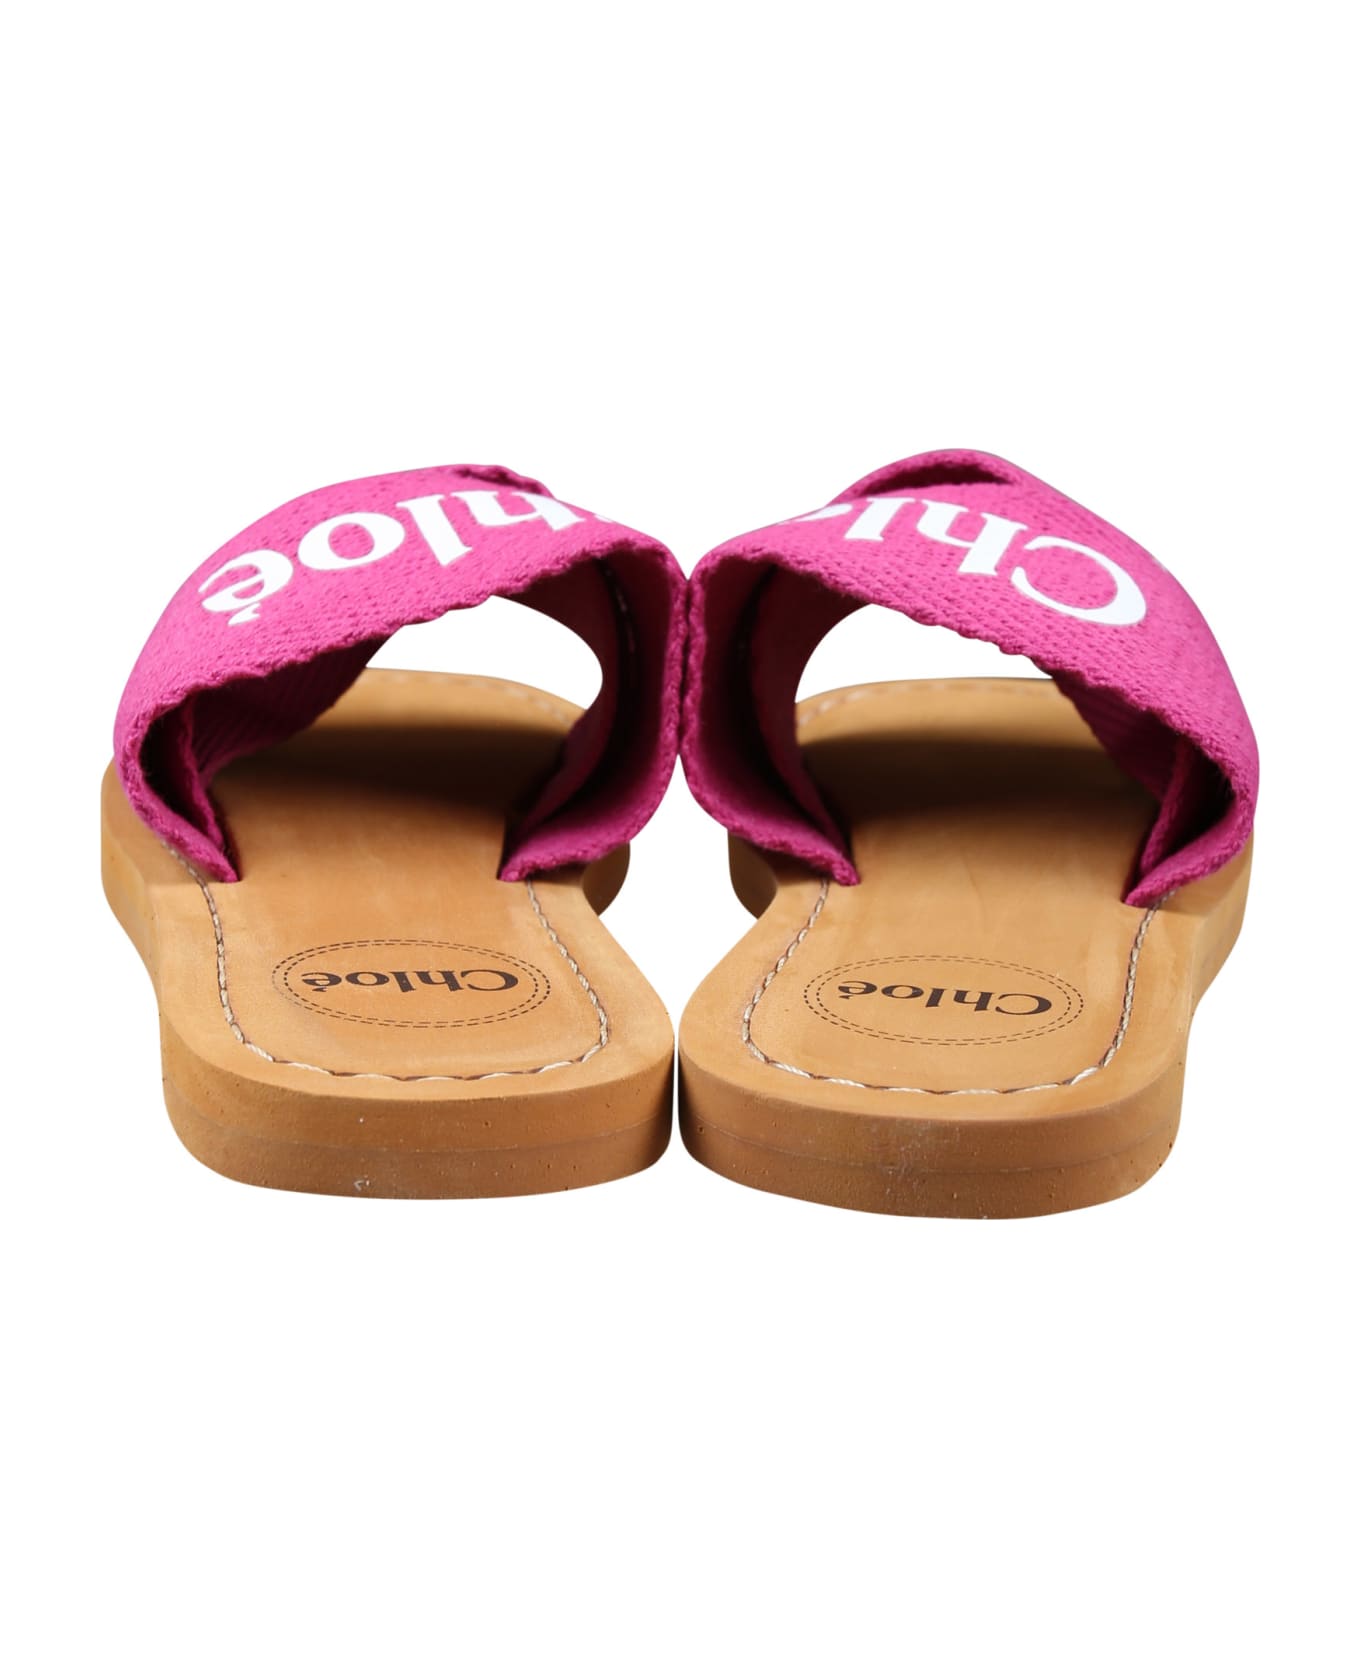 Chloé Fuchsia Slippers For Girl With Logo - Fuchsia シューズ